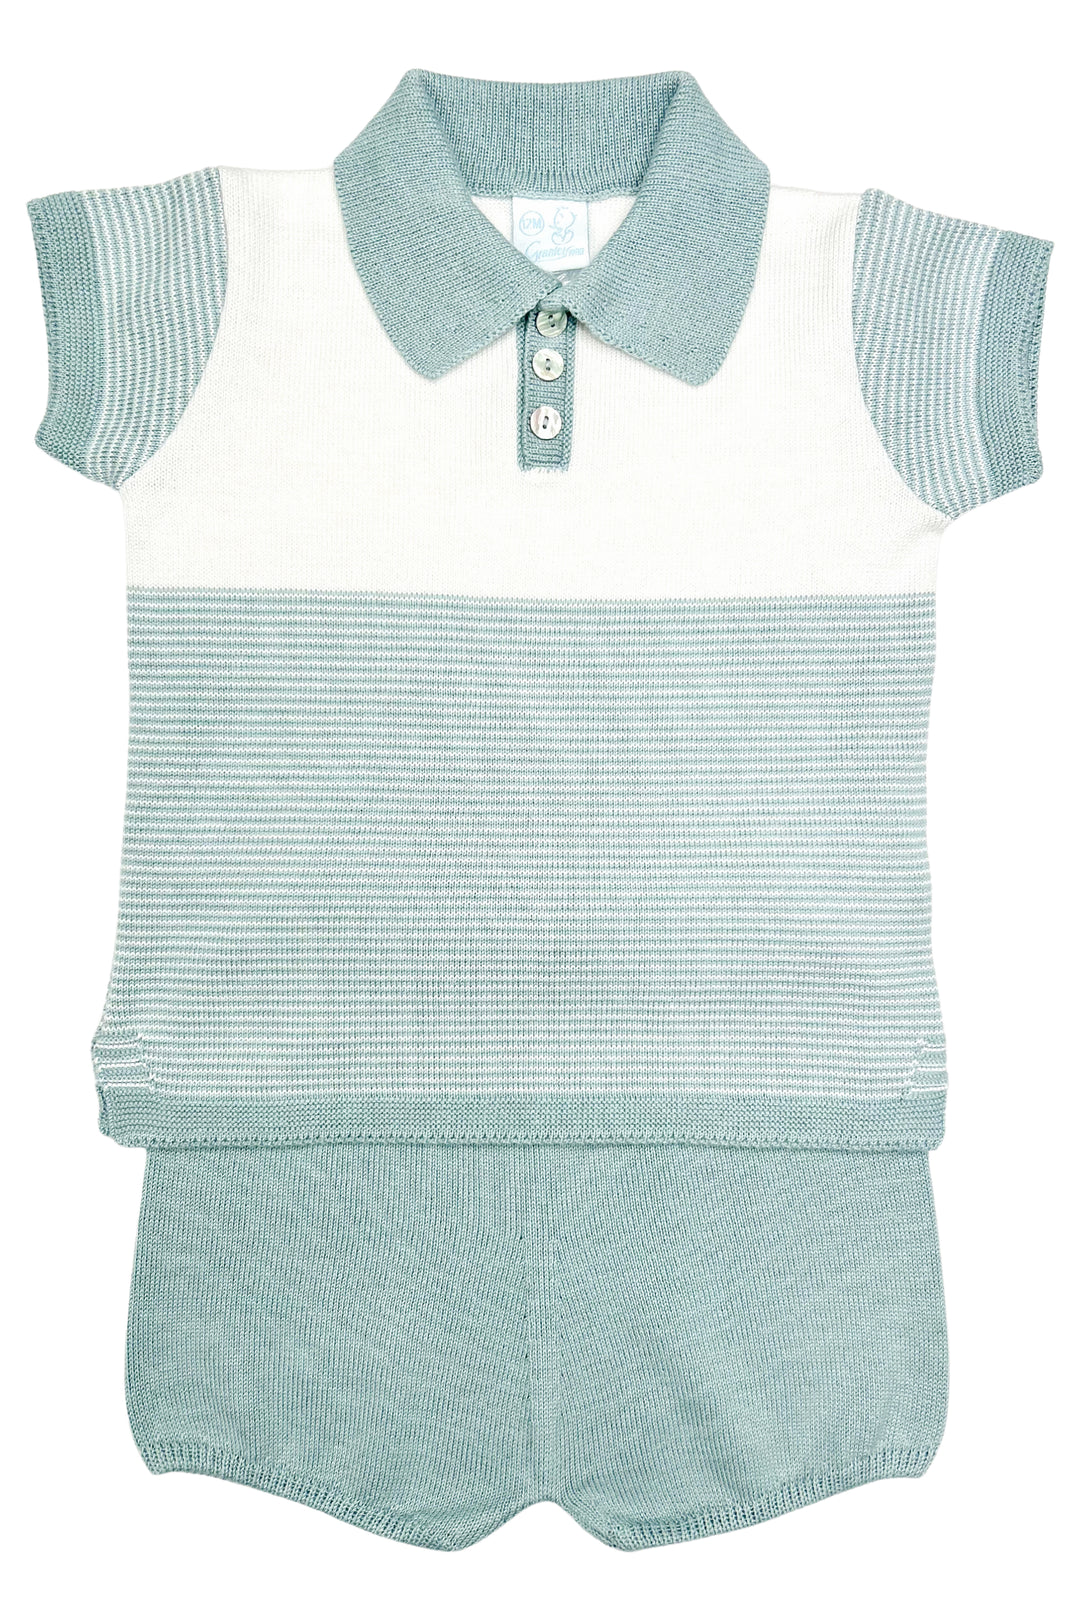 Granlei "Rufus" Teal Striped Knit Polo Shirt & Shorts | Millie and John